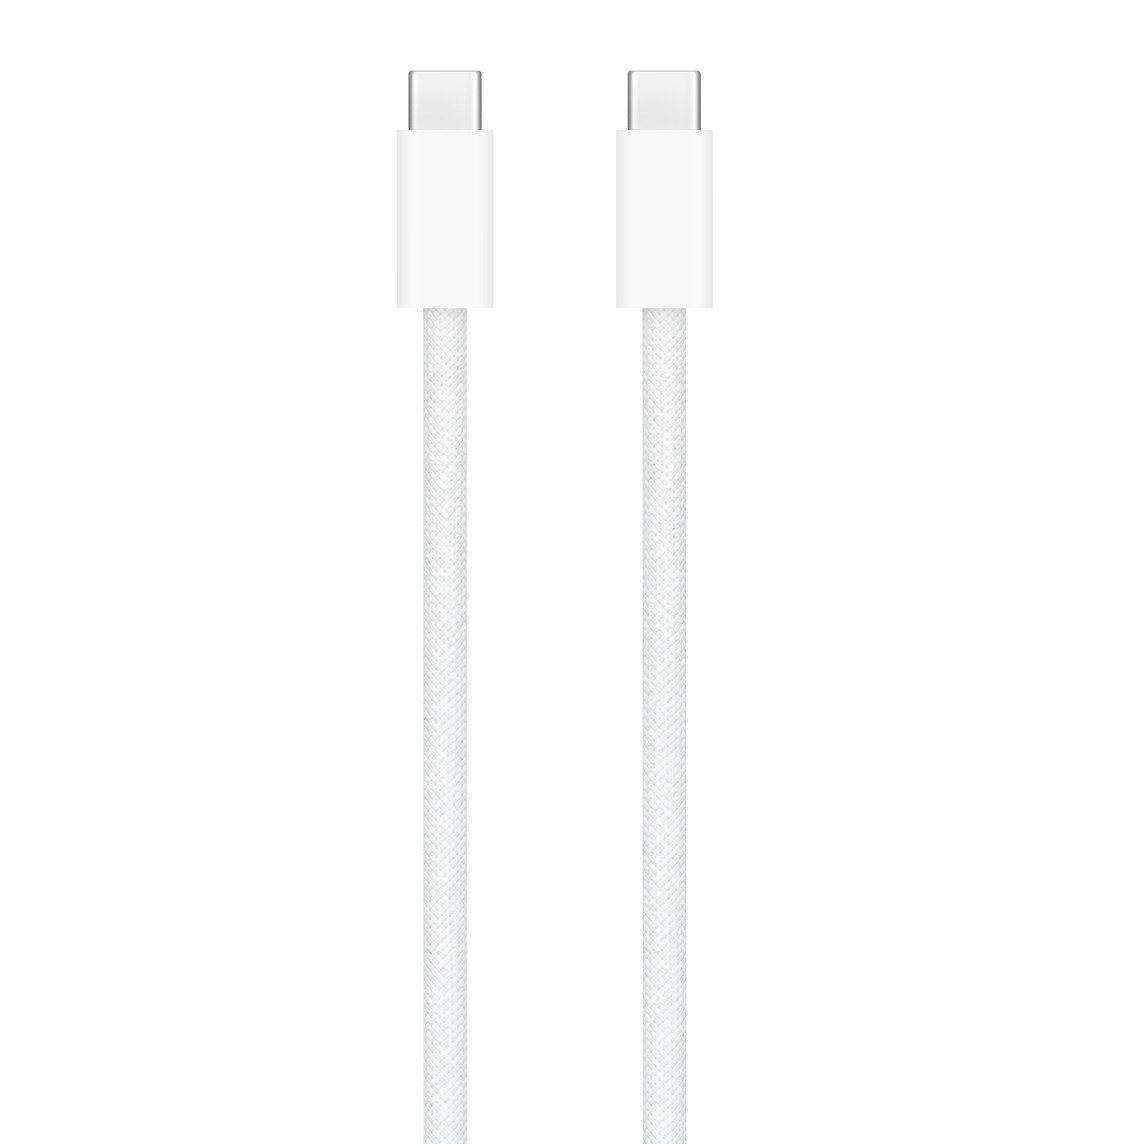 Cáp sạc Apple 240W USB-C Charge Cable (2m)